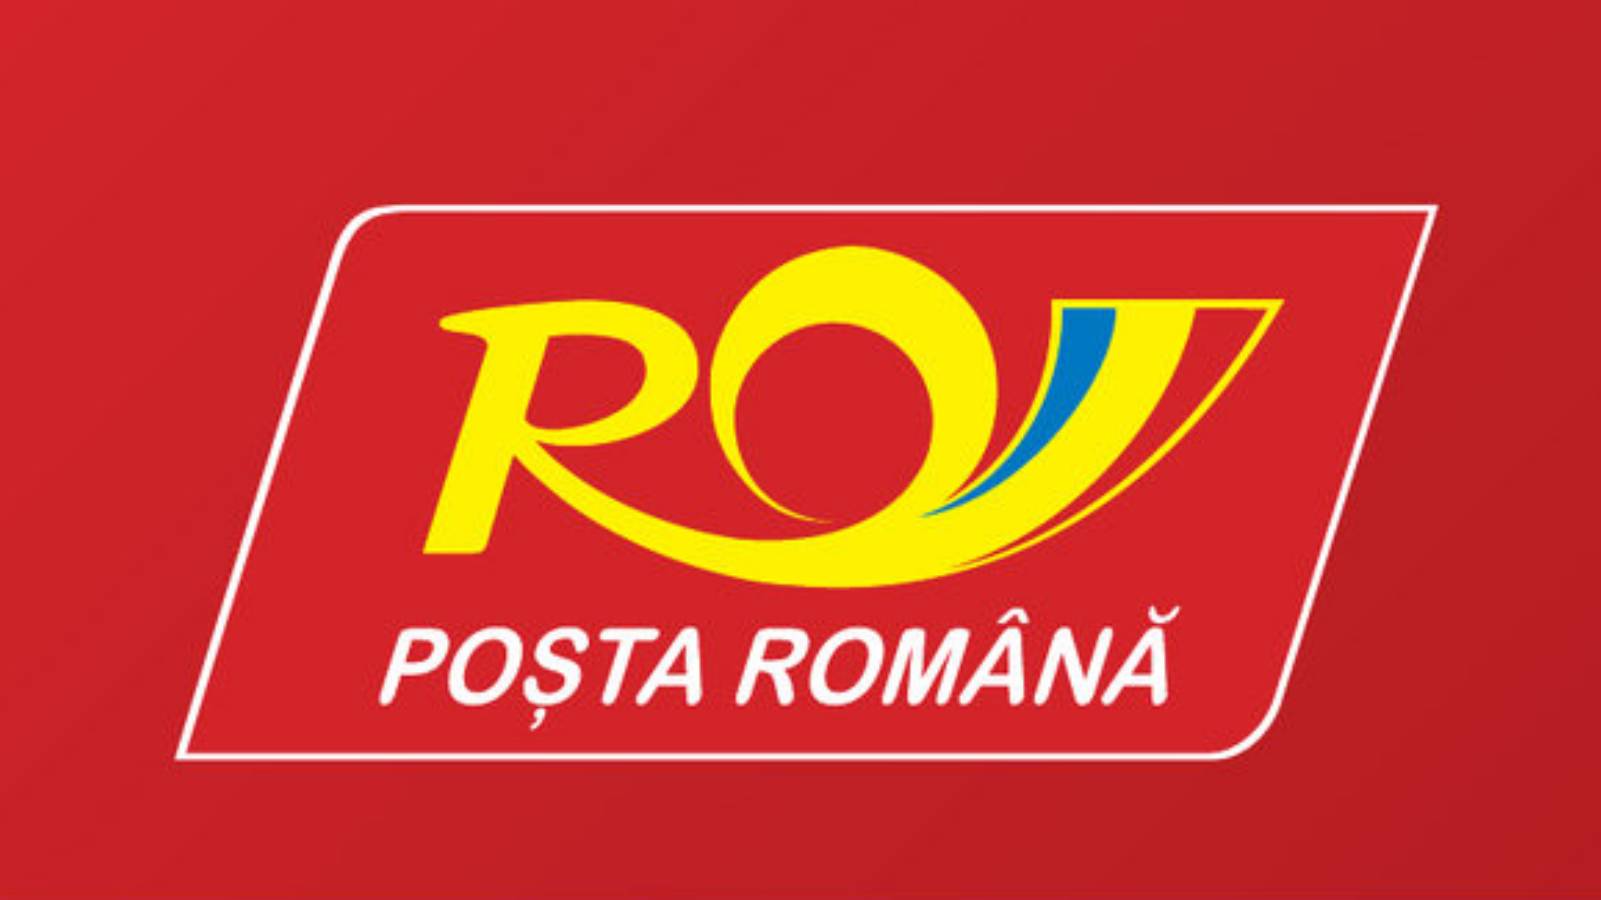 Posta Romana besked rumænere